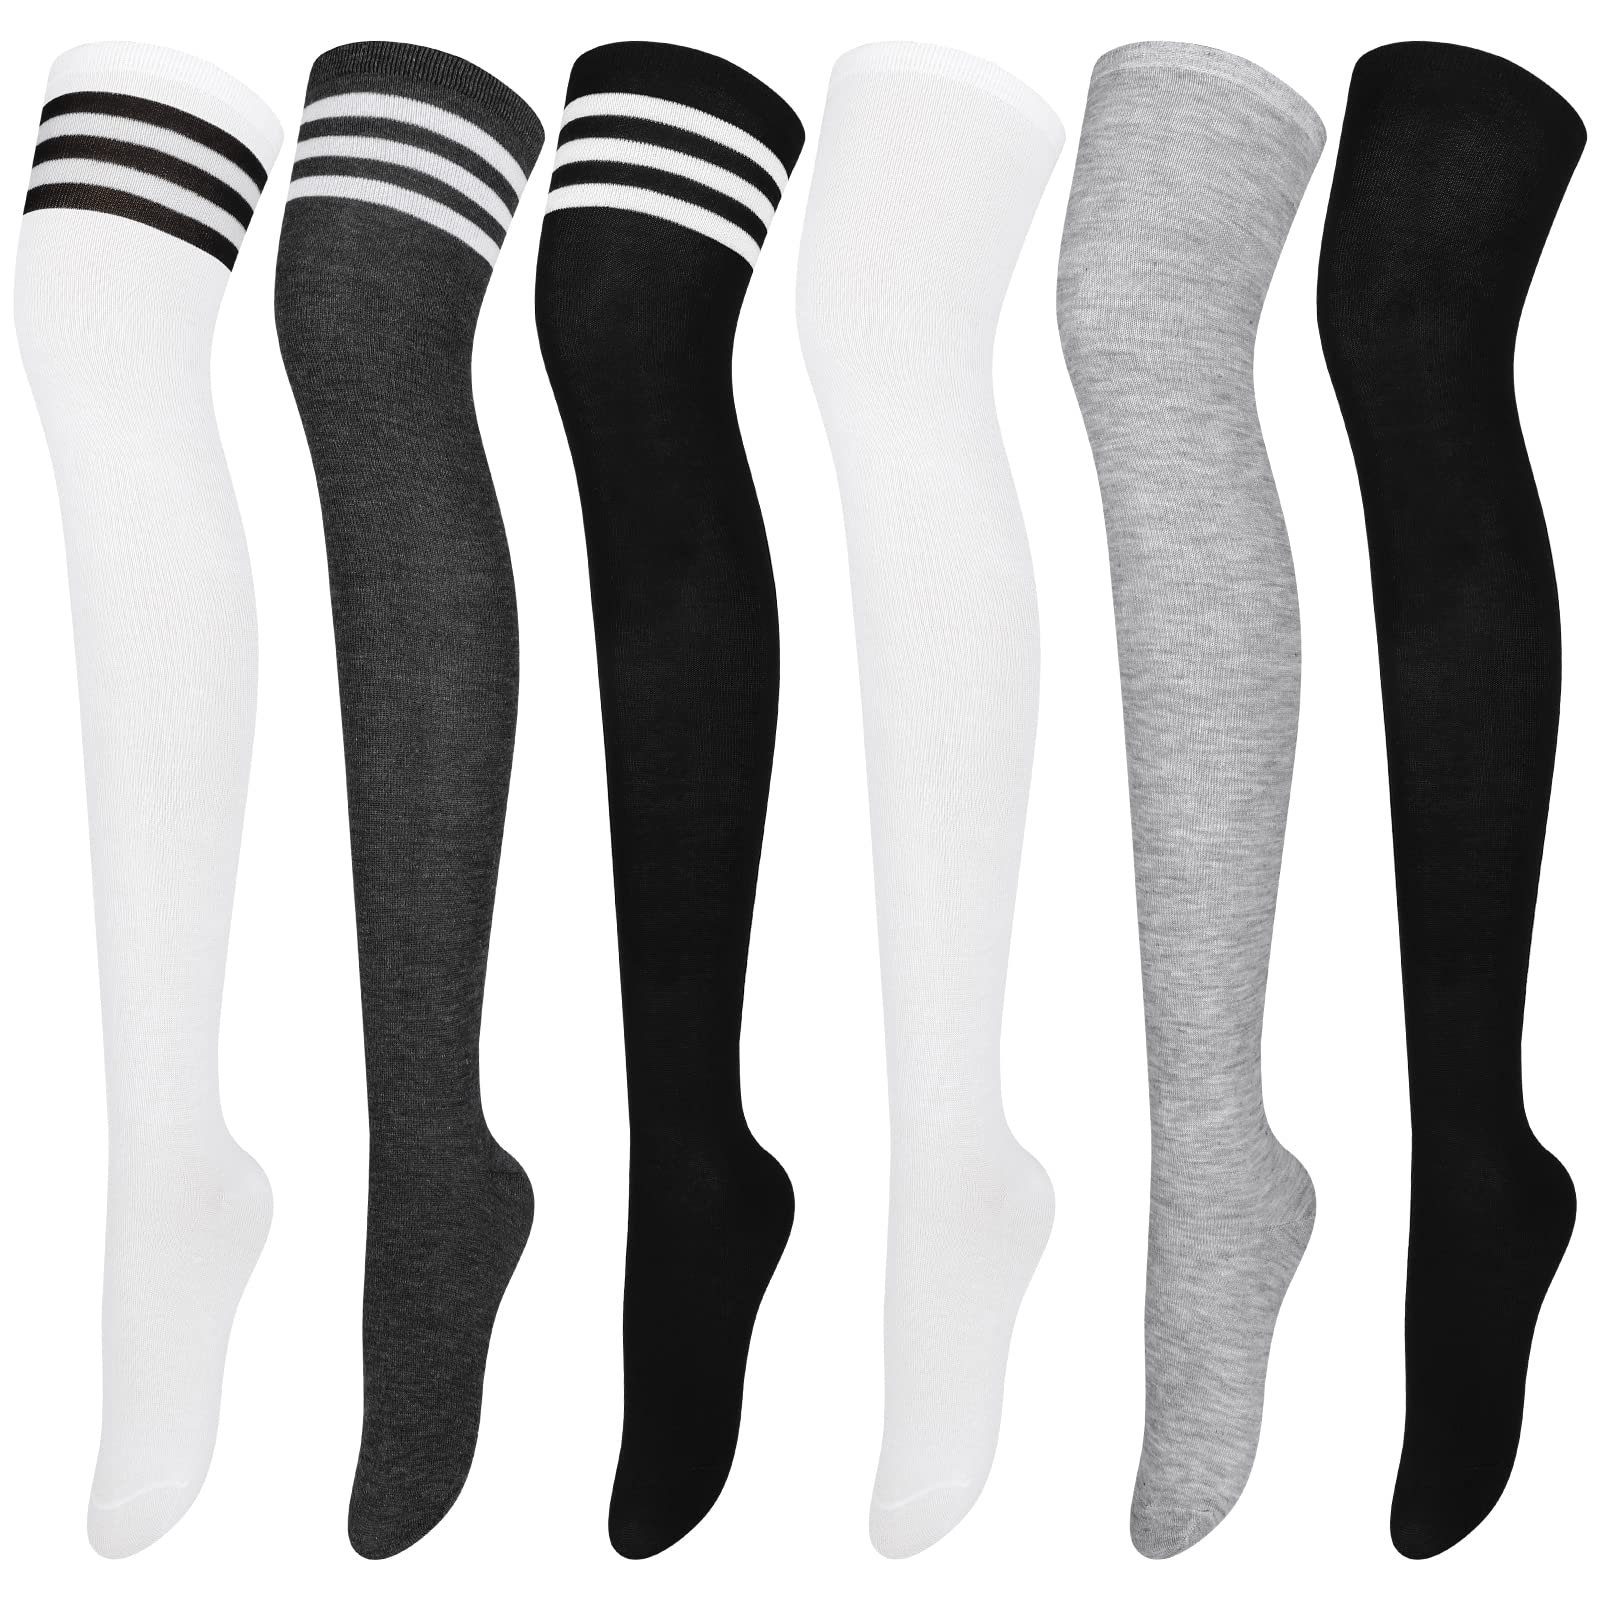 POCHUMIDUU Langsocken kniehoch, 6 Paar (6-Paar) Stiefel, Oberschenkel, Overknee-Oberschenkel-Socken, warme hohe Damensocken Strümpfe